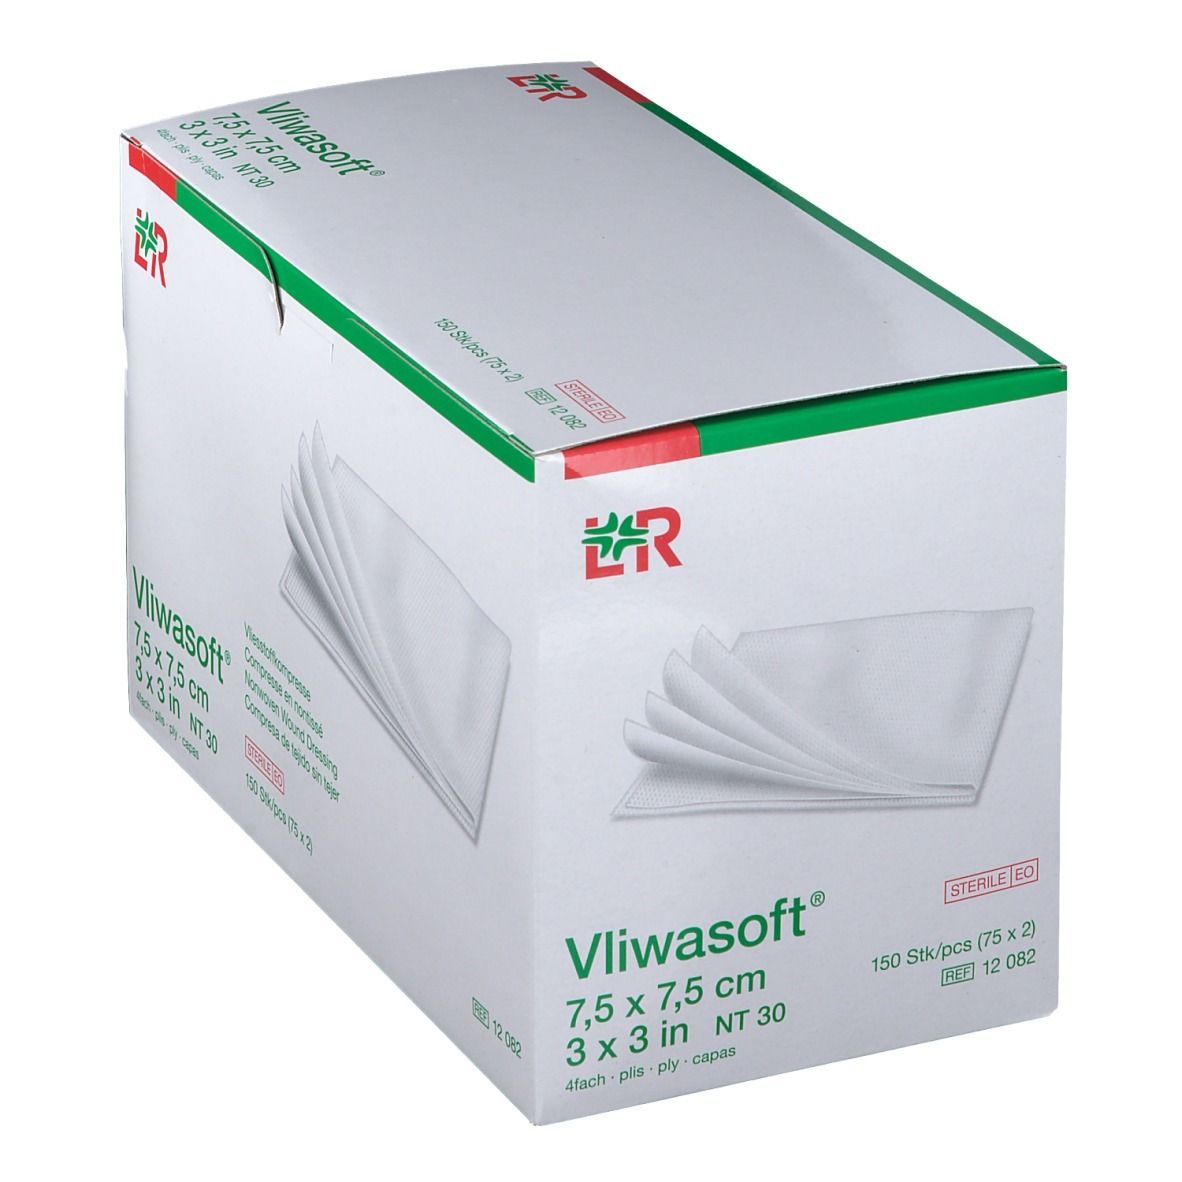 Vliwasoft® Vliesstoffkompresse 7,5 cm x 7,5 cm 4lagig steril